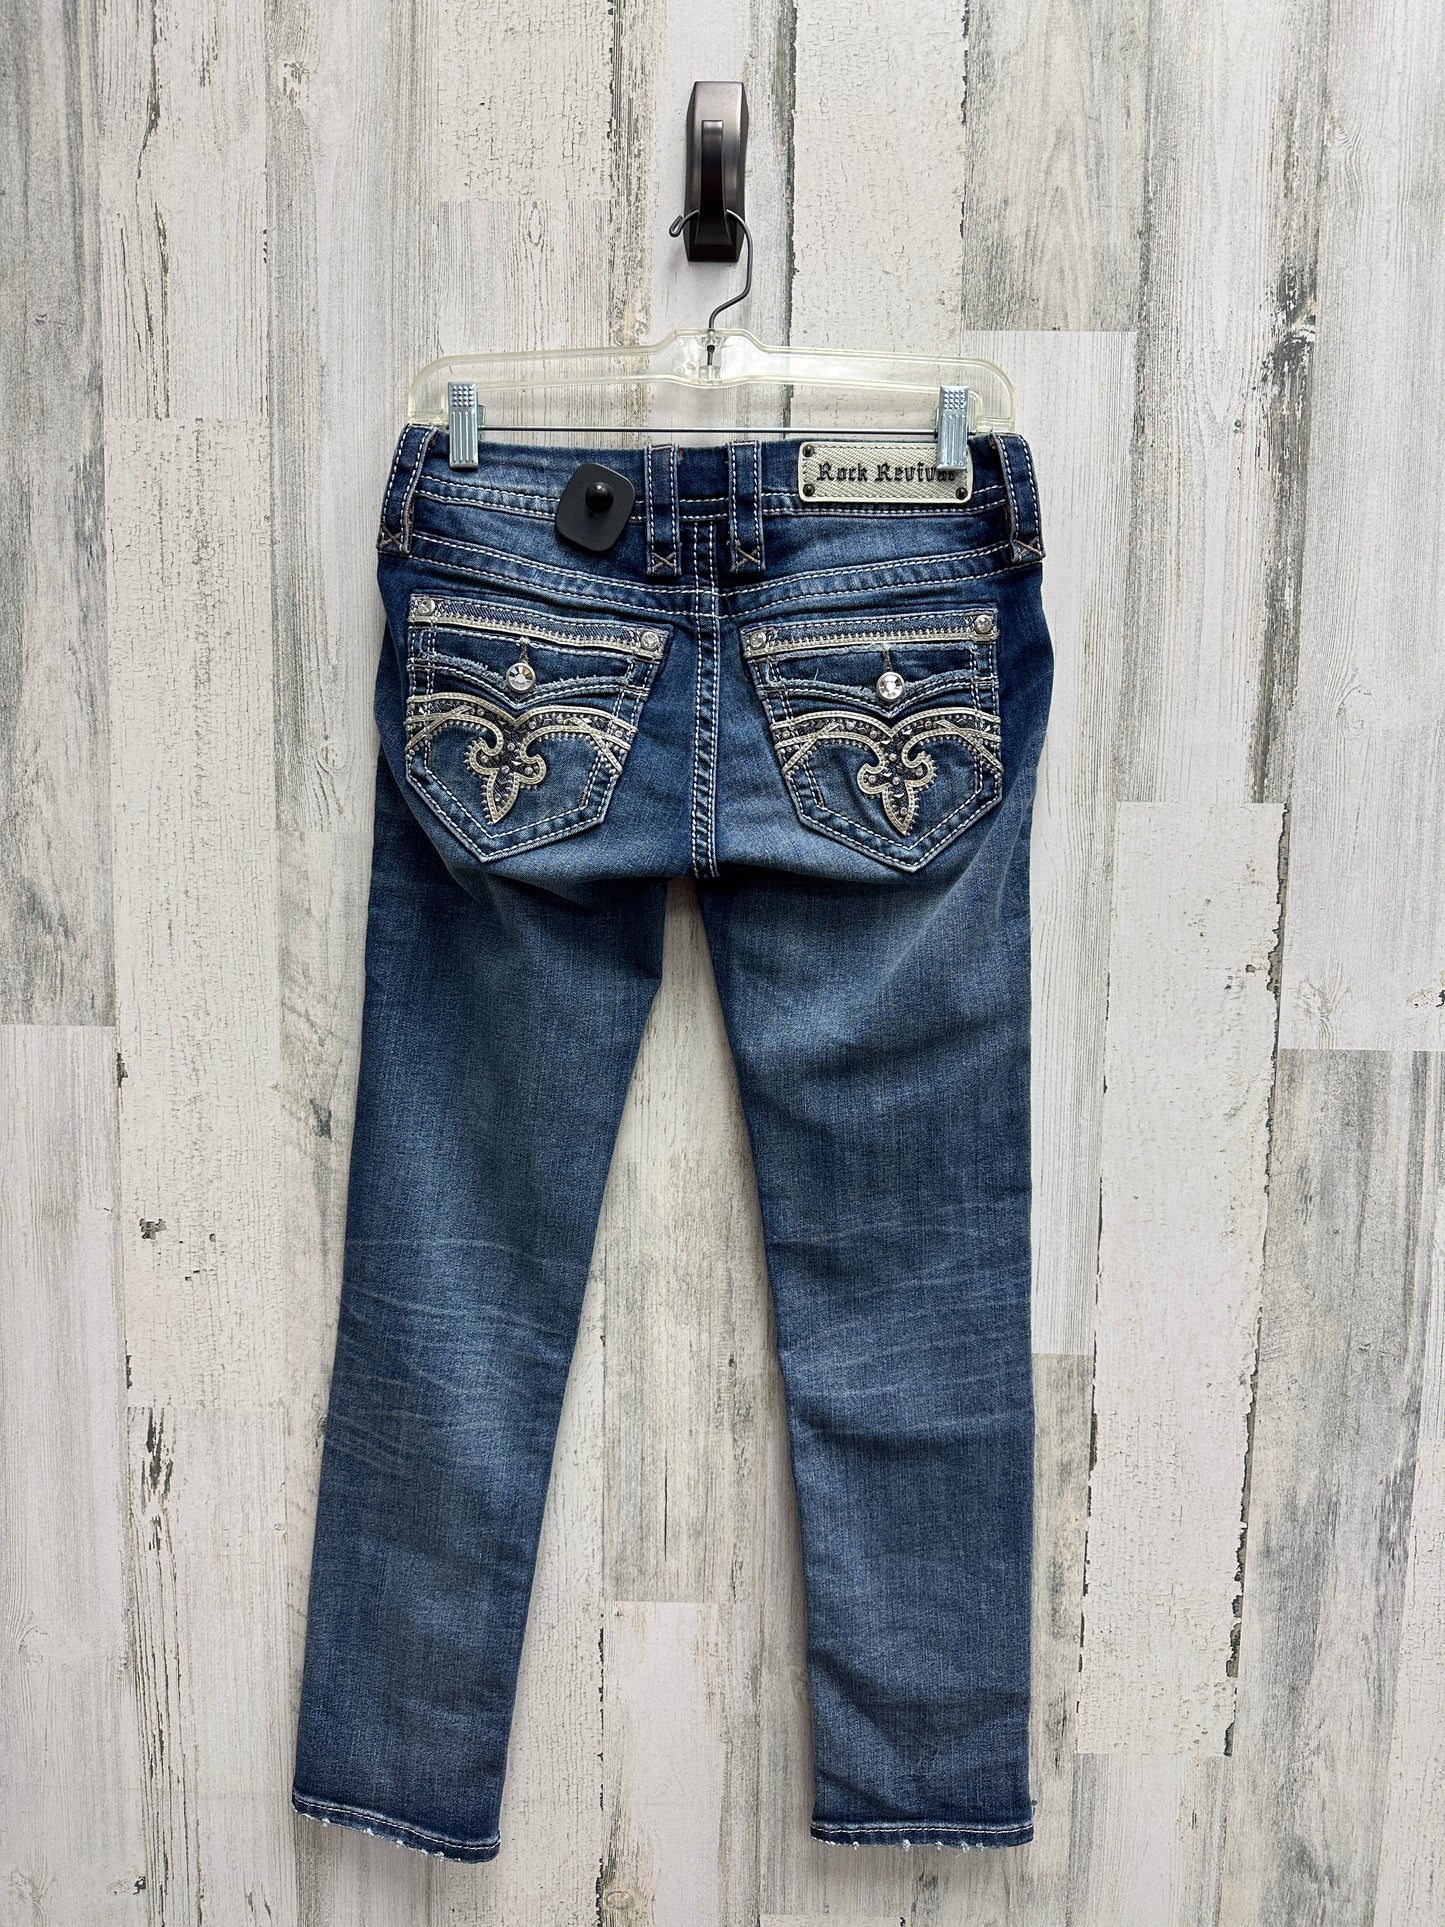 Jeans Designer By Rock Revival  Size: 2